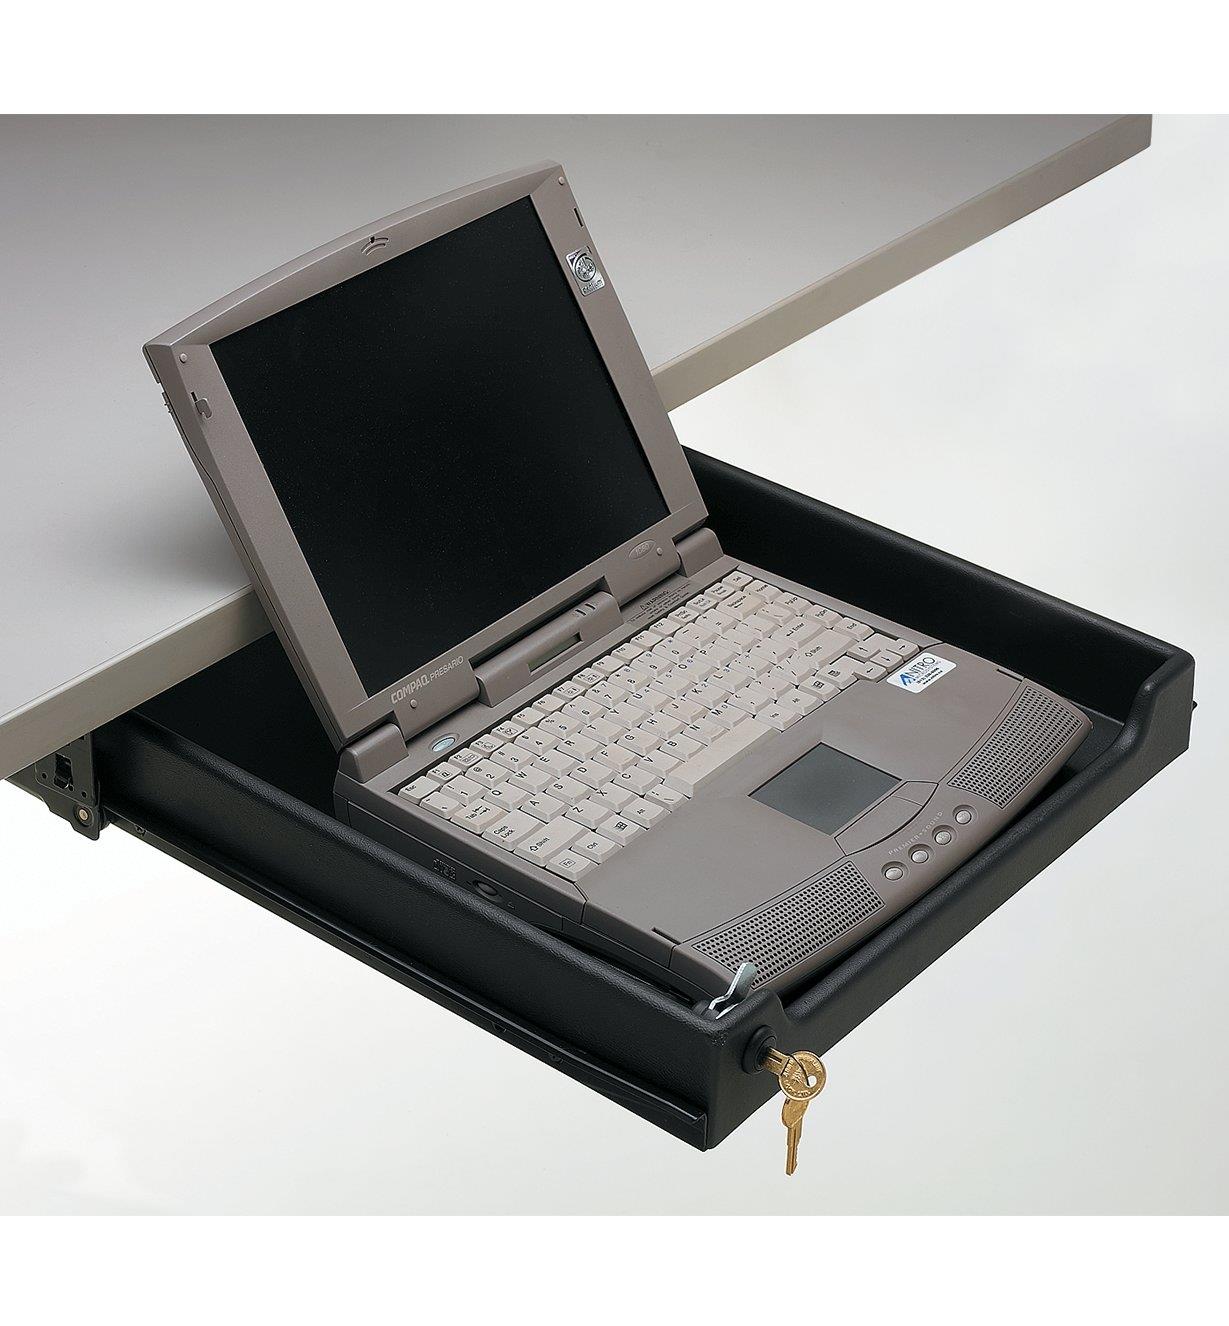 02K1190 - Laptop Computer Pullout